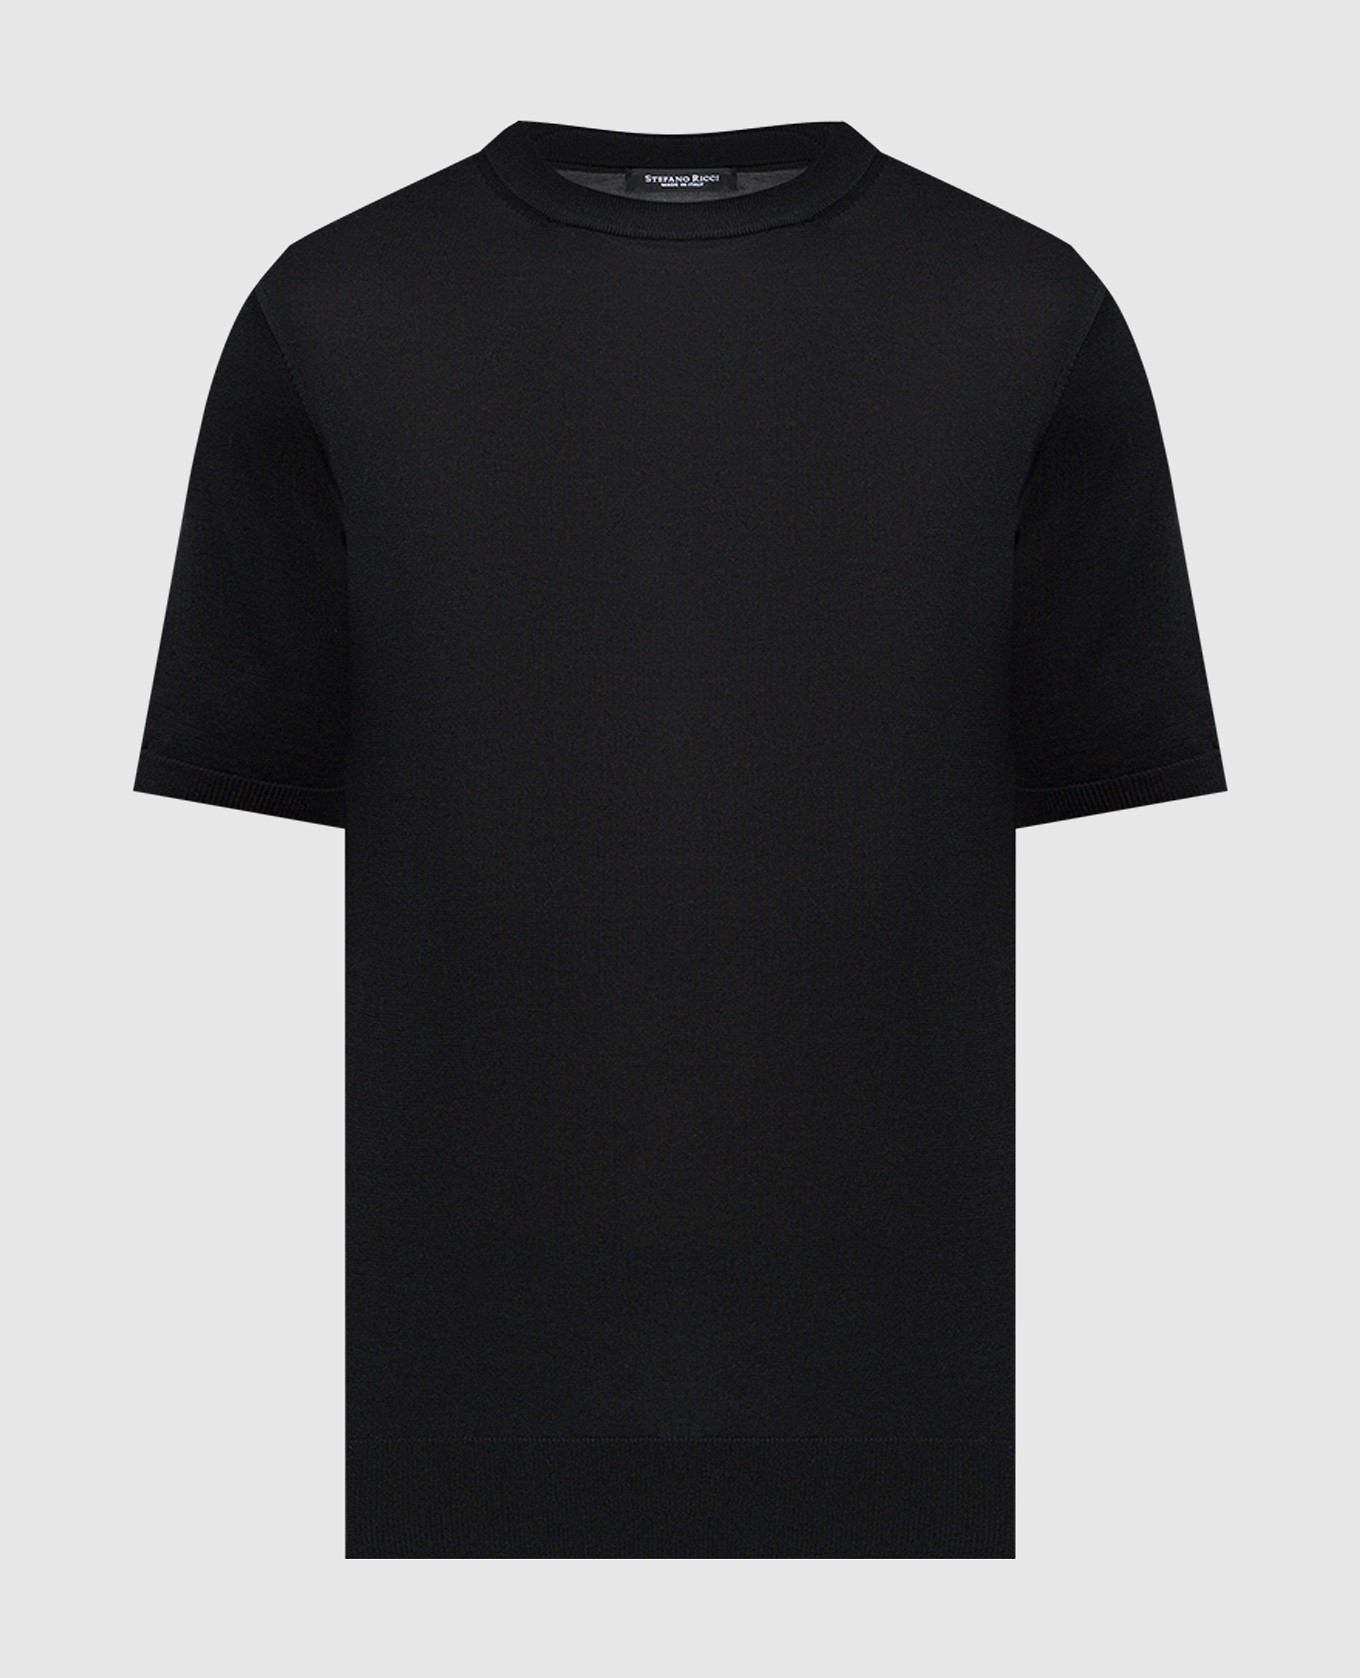 Black silk T-shirt with logo